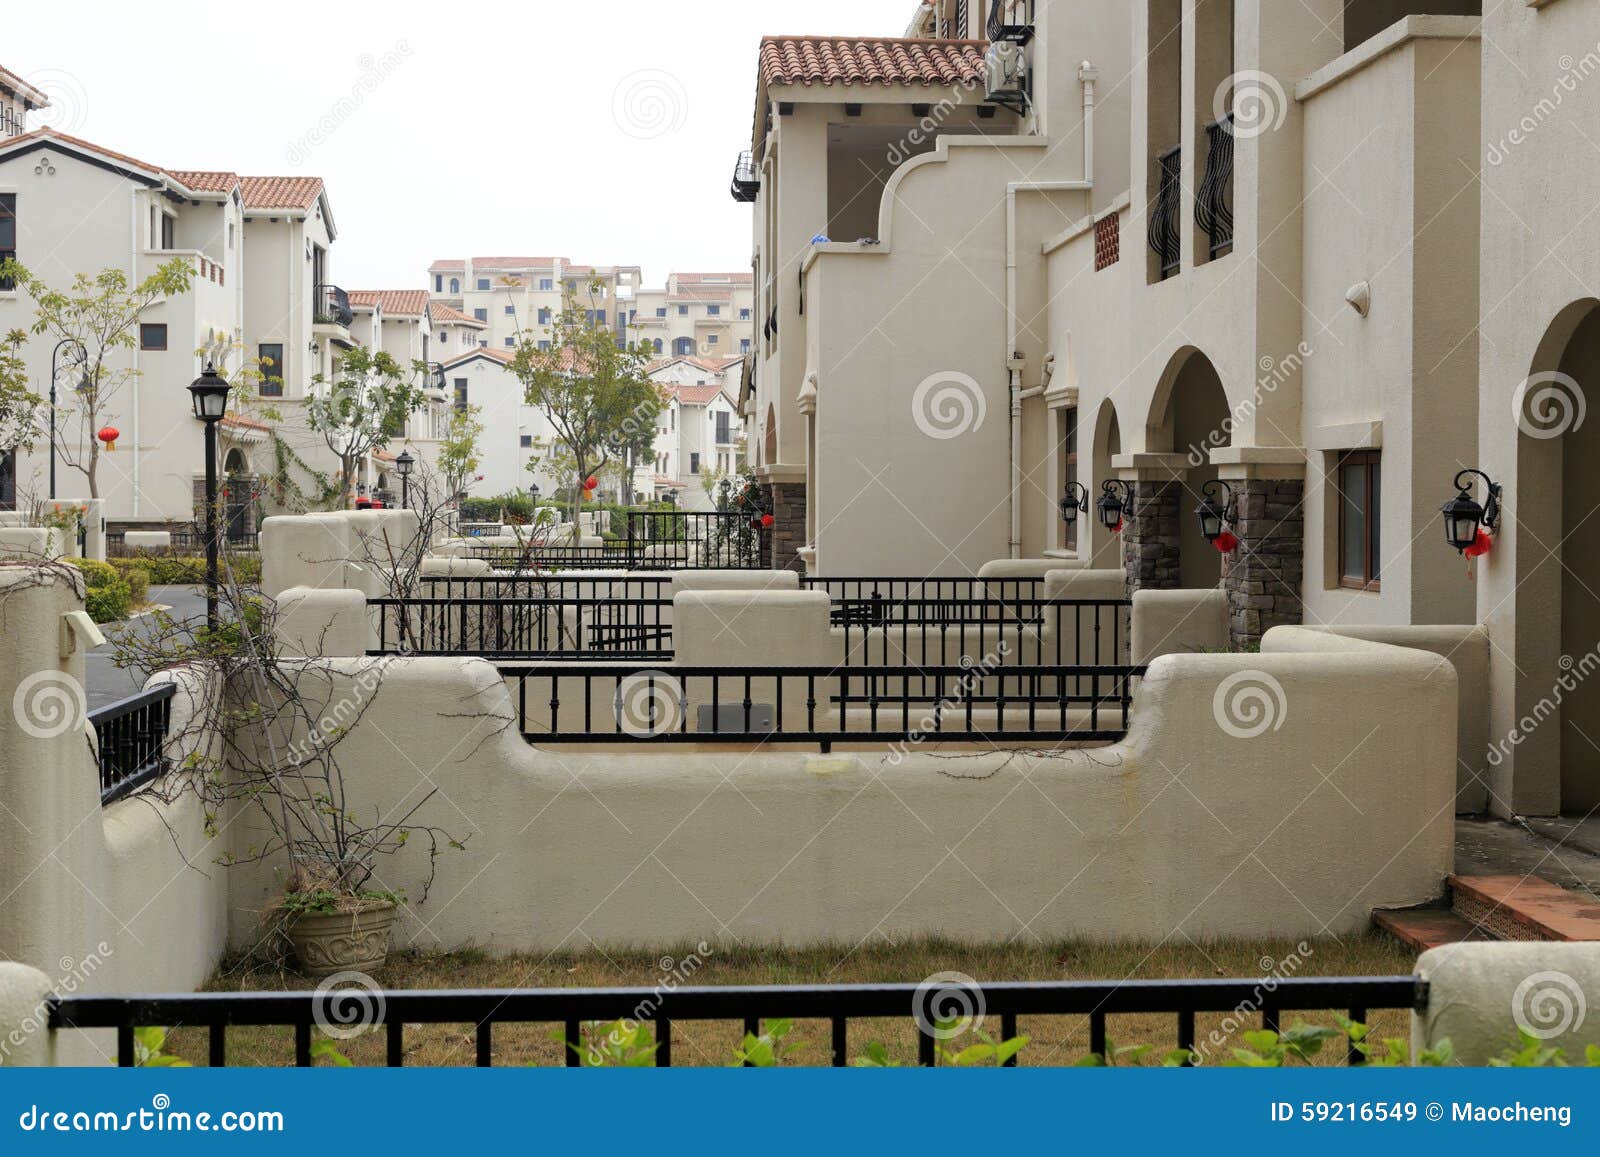 The Backyard Of Spanish Style Houses Stock Image Image Of Style Backyard 59216549